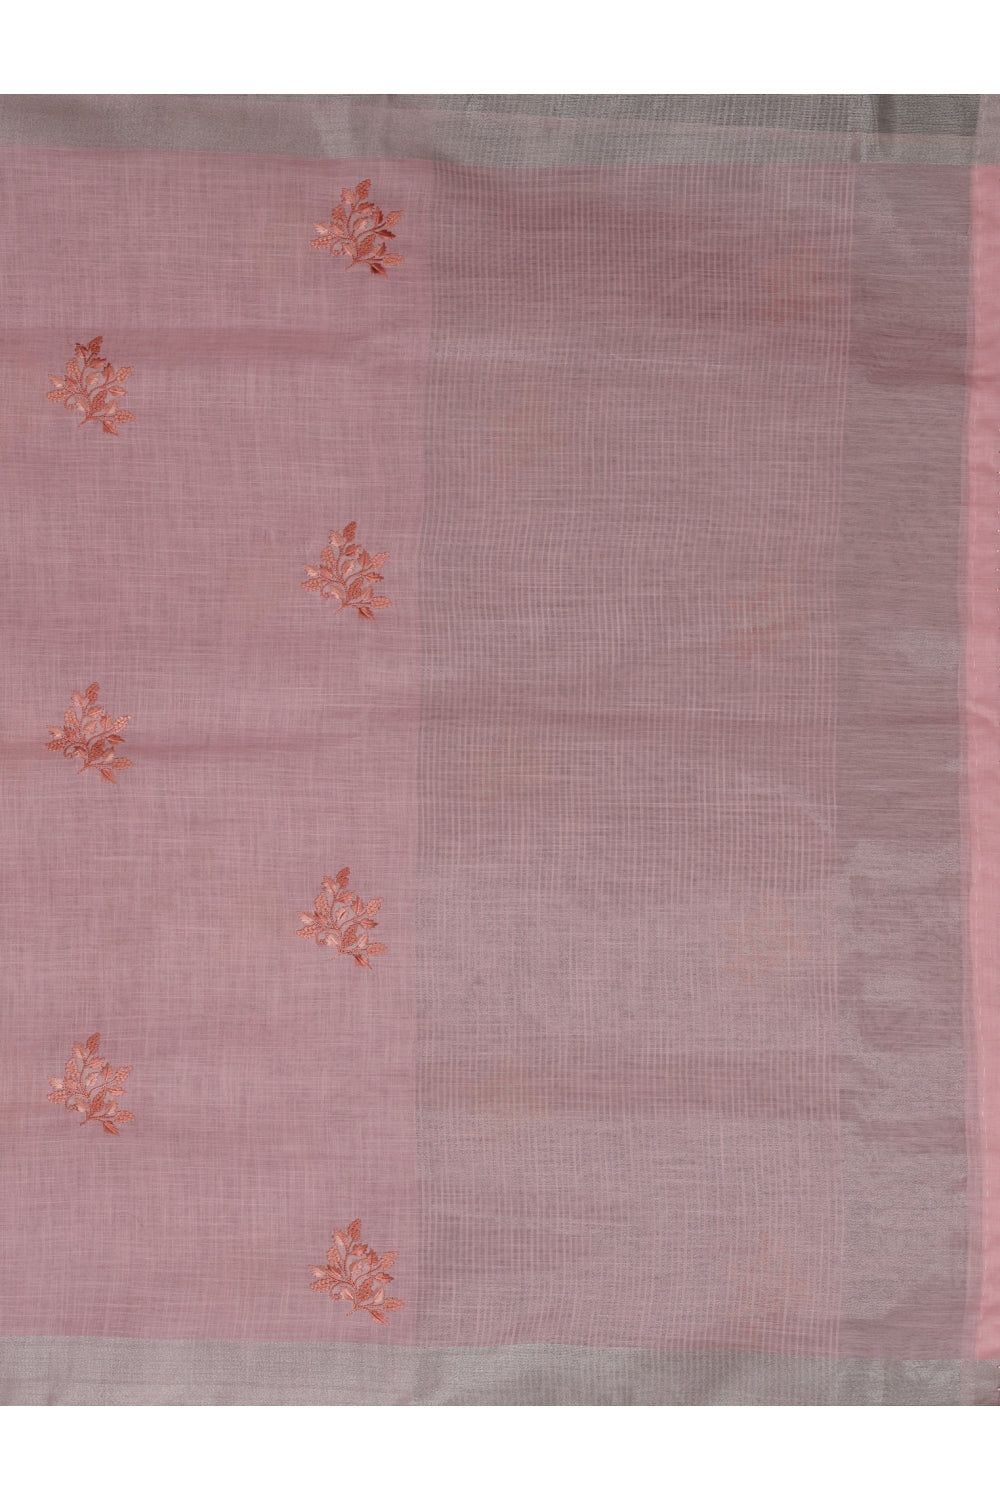 Rose Pink Hand Embroidered Linen Saree Devam